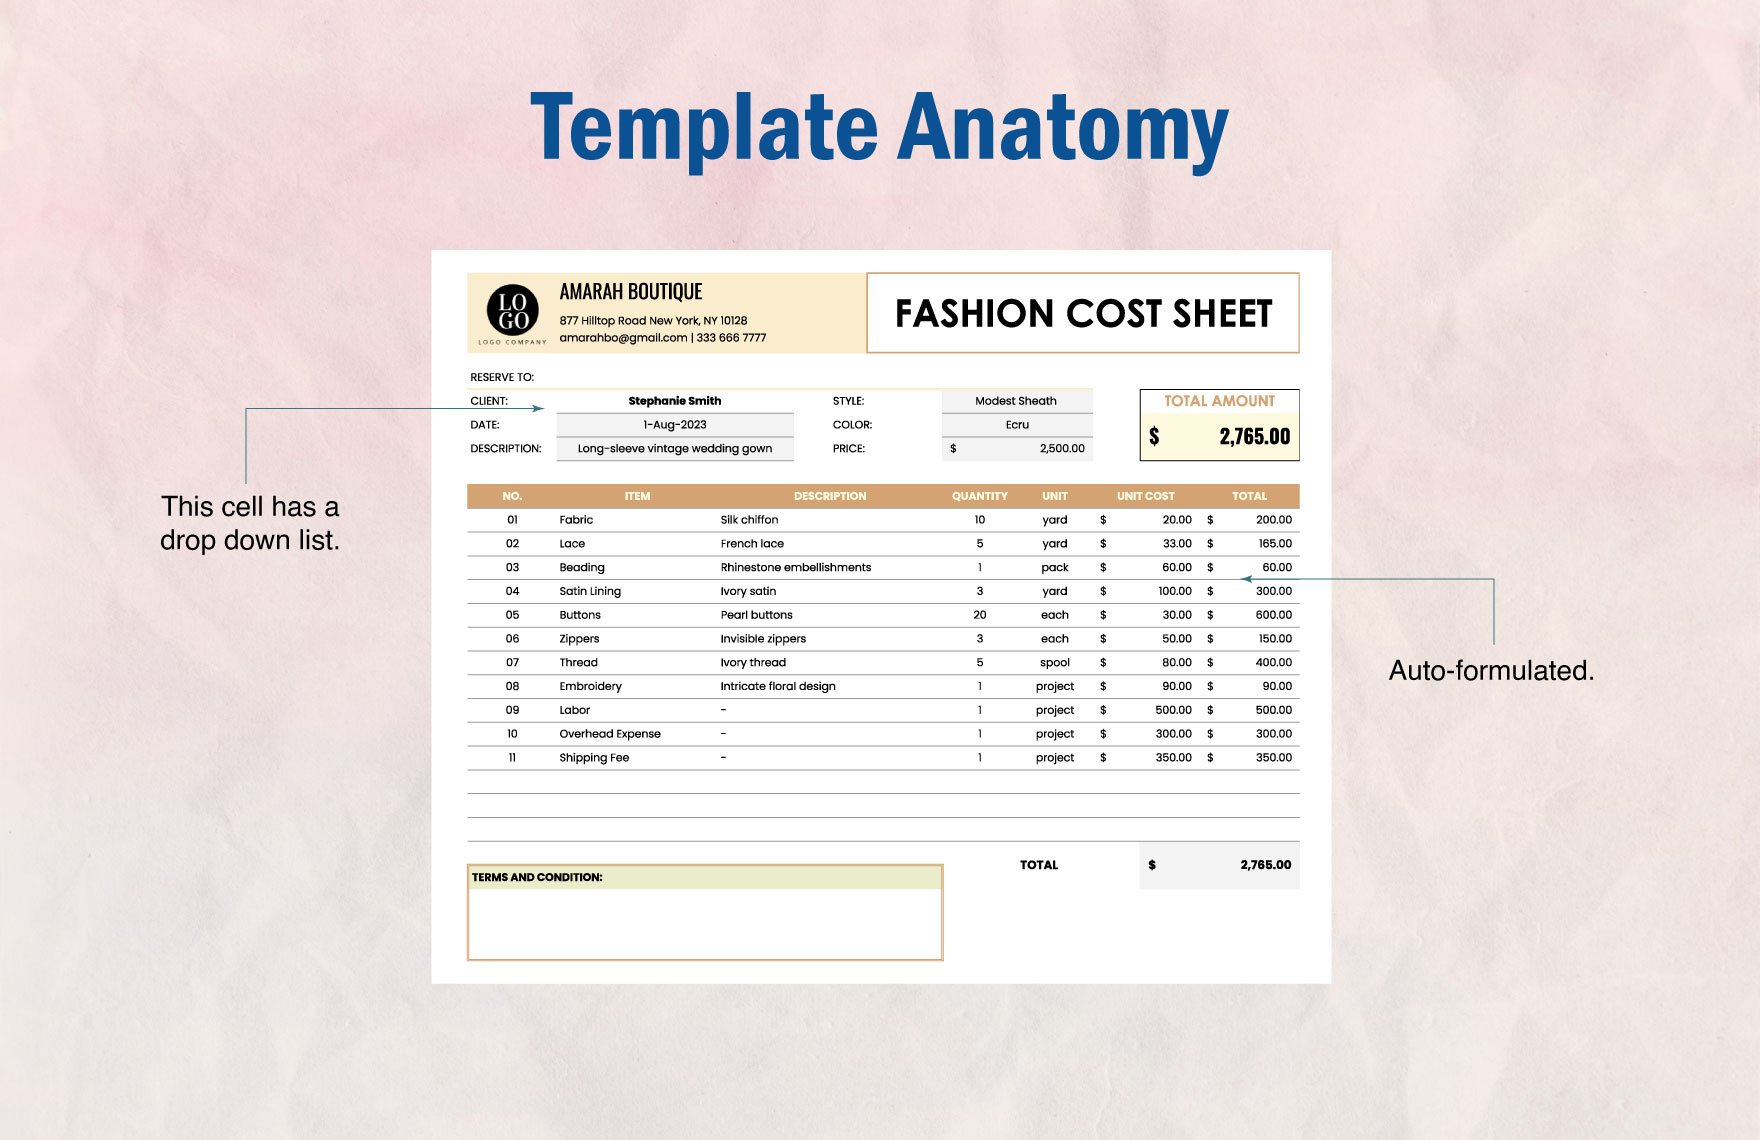 Fashion Cost Sheet Template